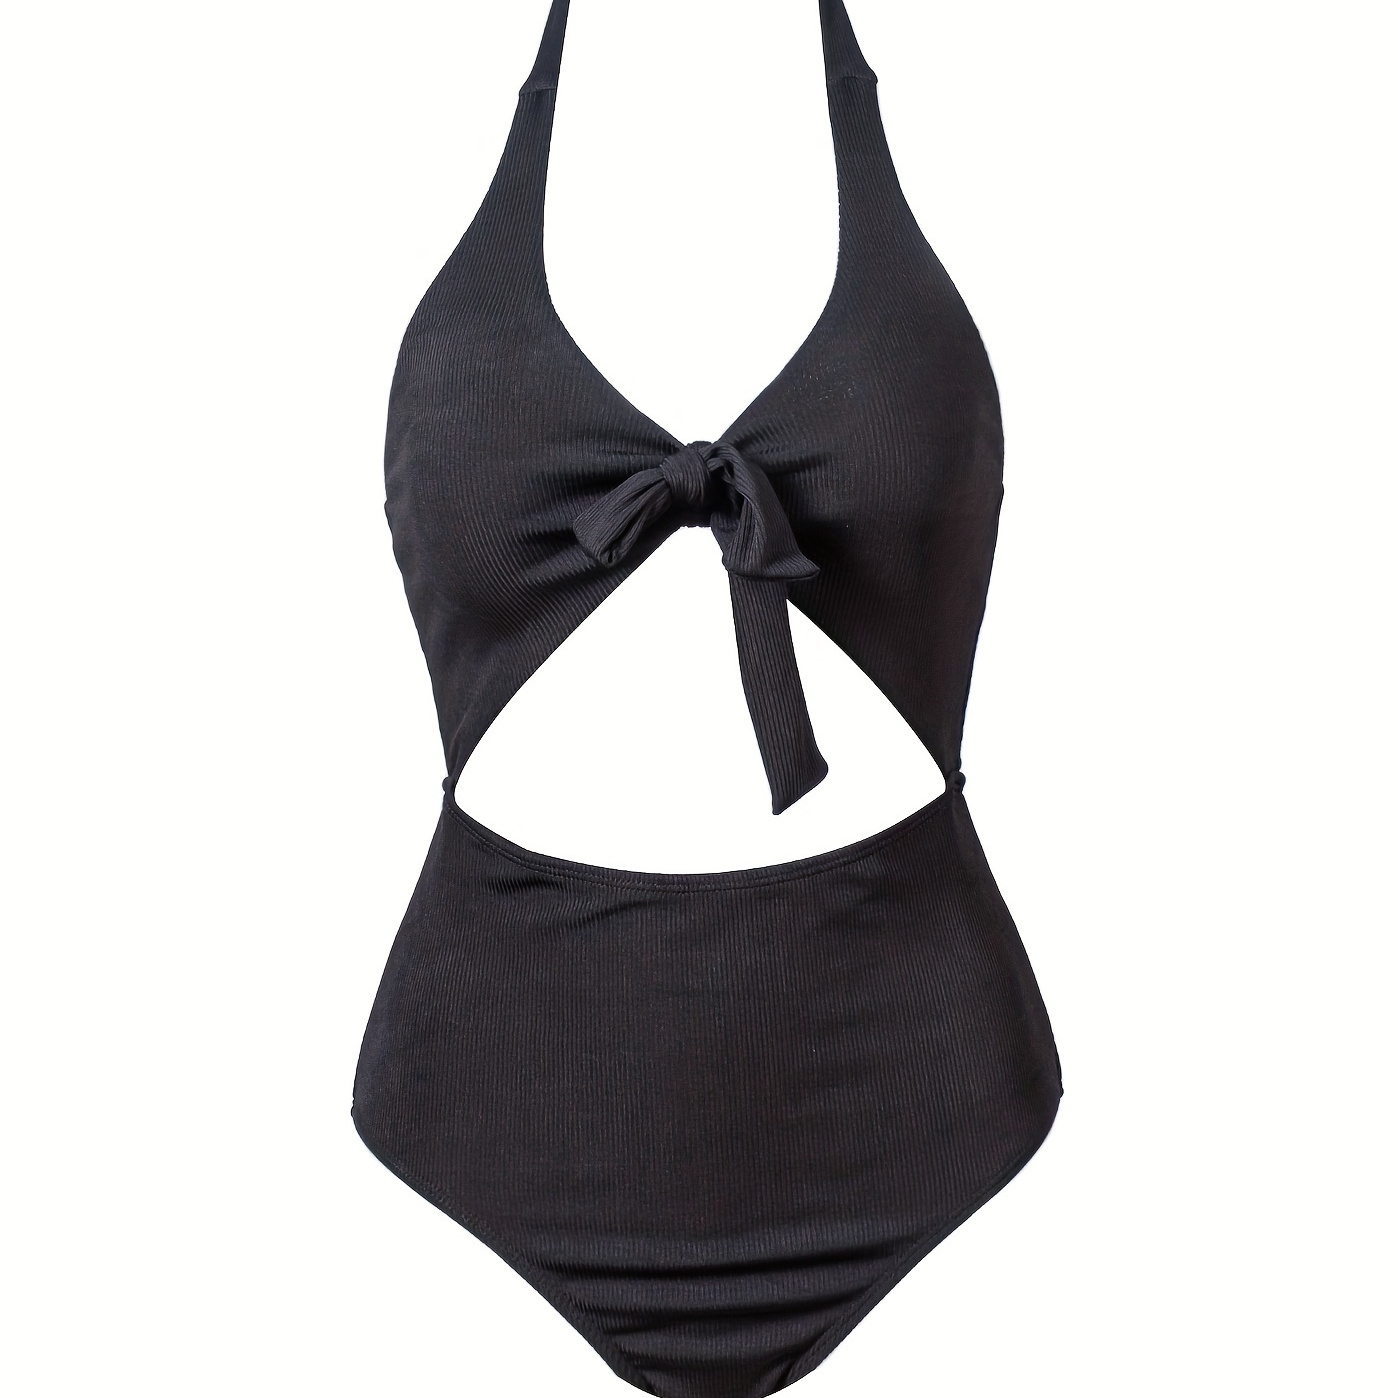 

Rib Knit Texture Halter Neck 1 Piece Swimsuit, Knot Tie Front Cut Out Black Bathing Suit, Women's Swimwear & Clothing